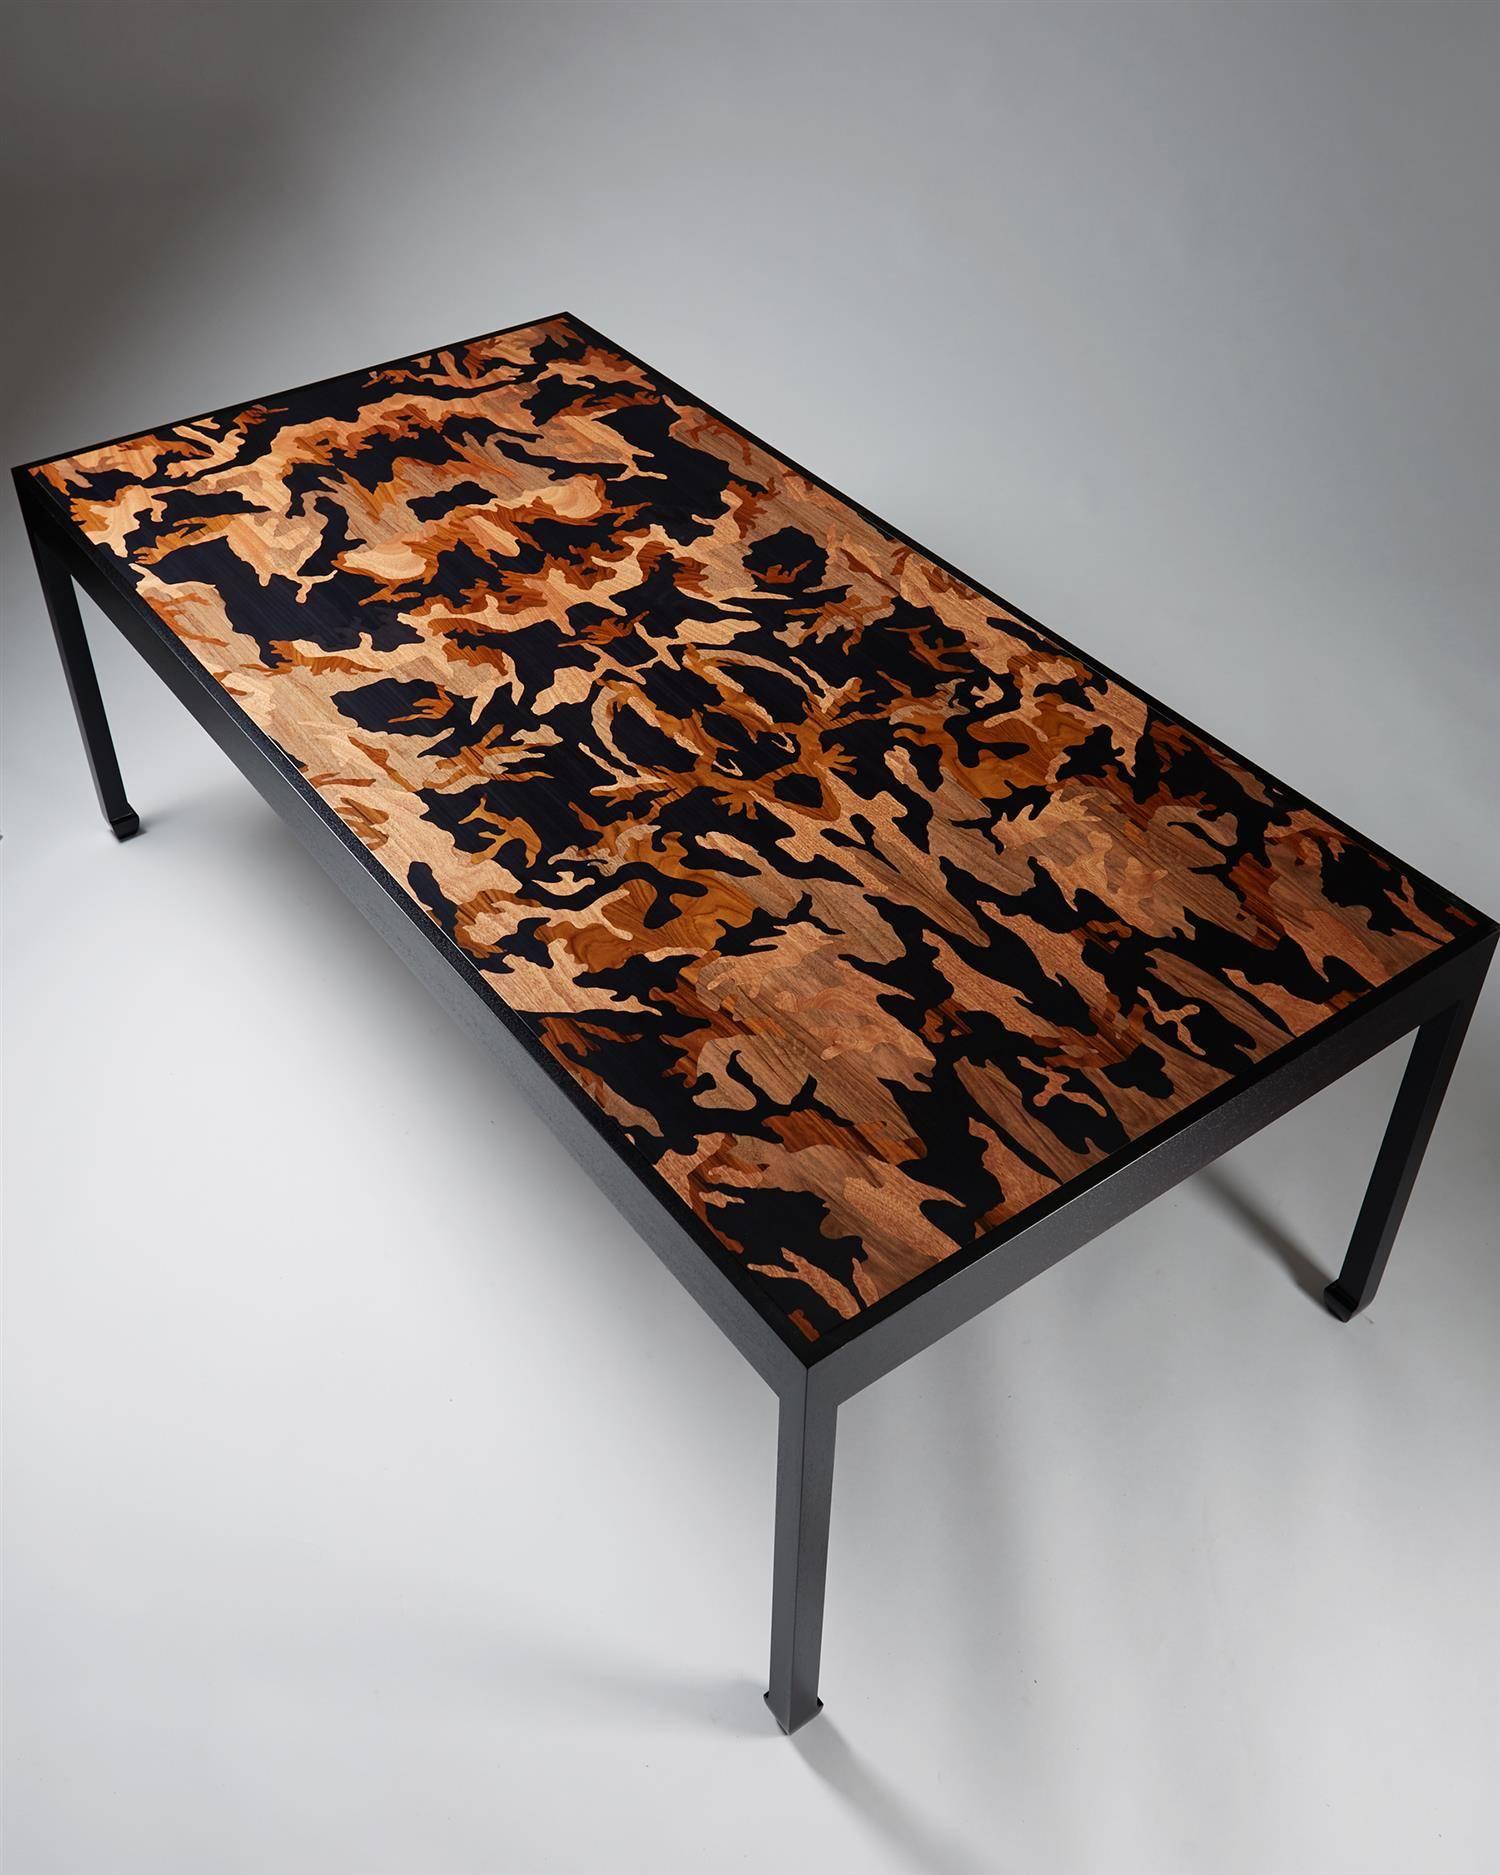 Dining table designed by Morten Höeg Larsen, Denmark. 2015.
Ebonized wood and various wood inlays.
Unique.

H: 72 cm/ 28 1/2''
L: 200 cm/ 6' 6 3/4''
W: 100 cm/ 39 1/2''